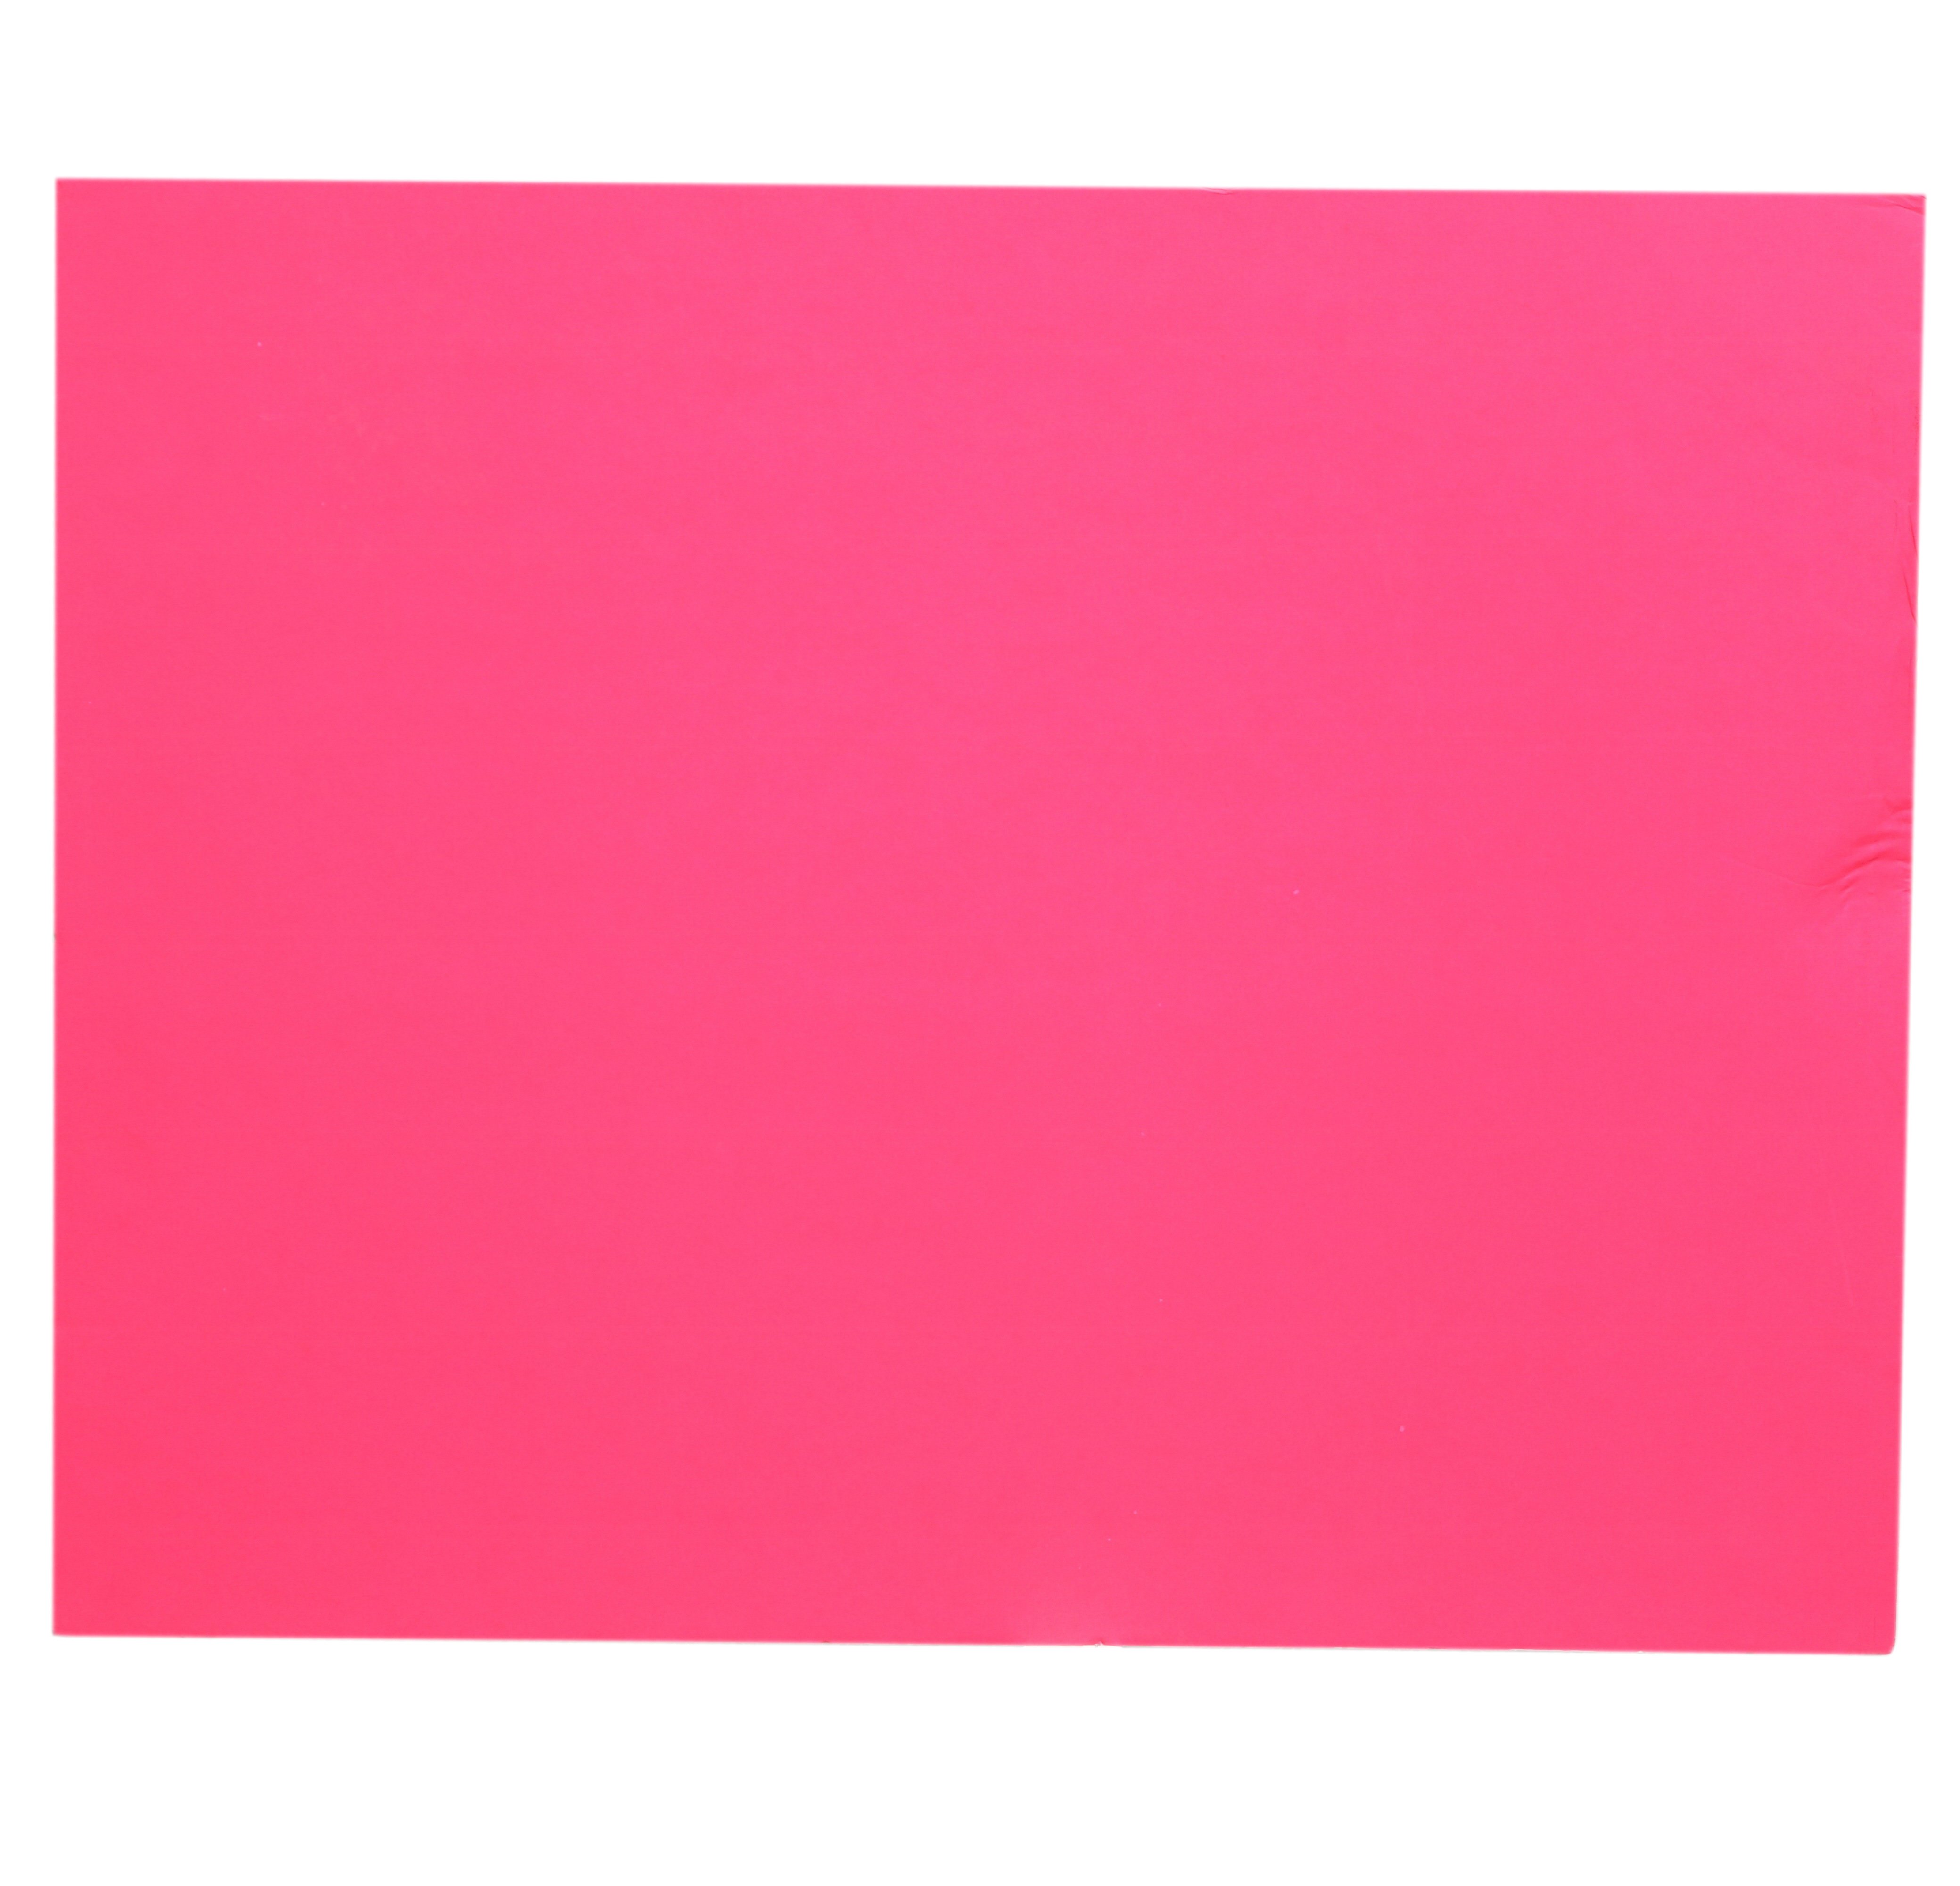 ArtSkills Pink Foam Board 22x28 in - Shop Foam & Poster Board at H-E-B